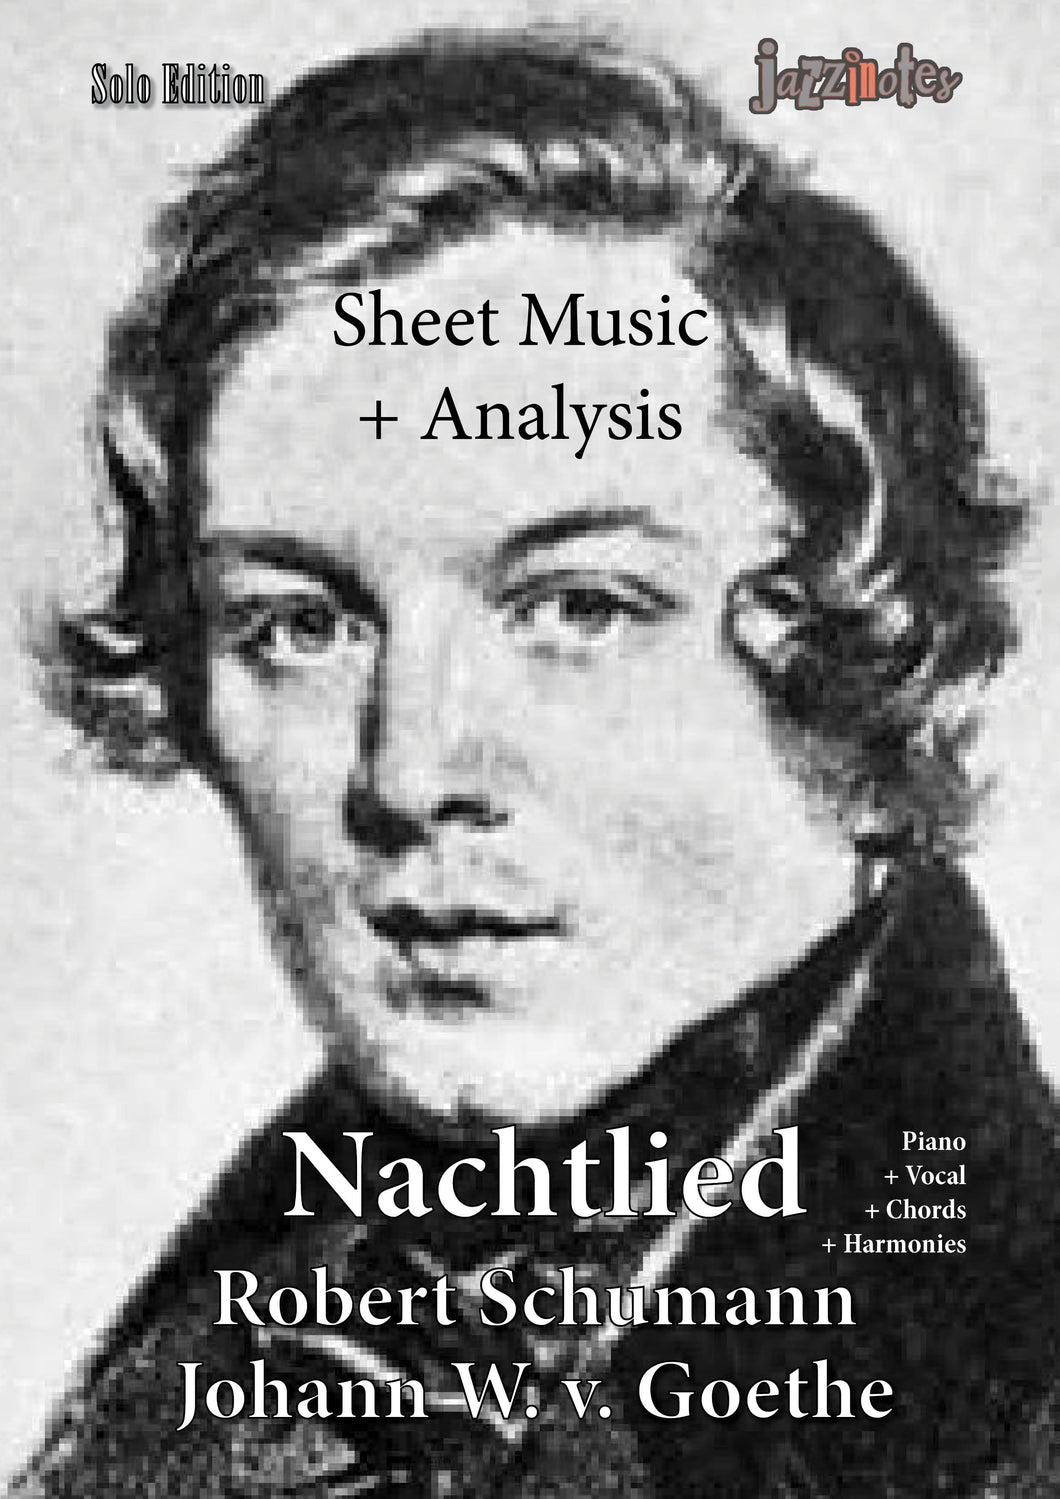 Schumann, Robert: Nachtlied - Sheet Music Download and Analysis